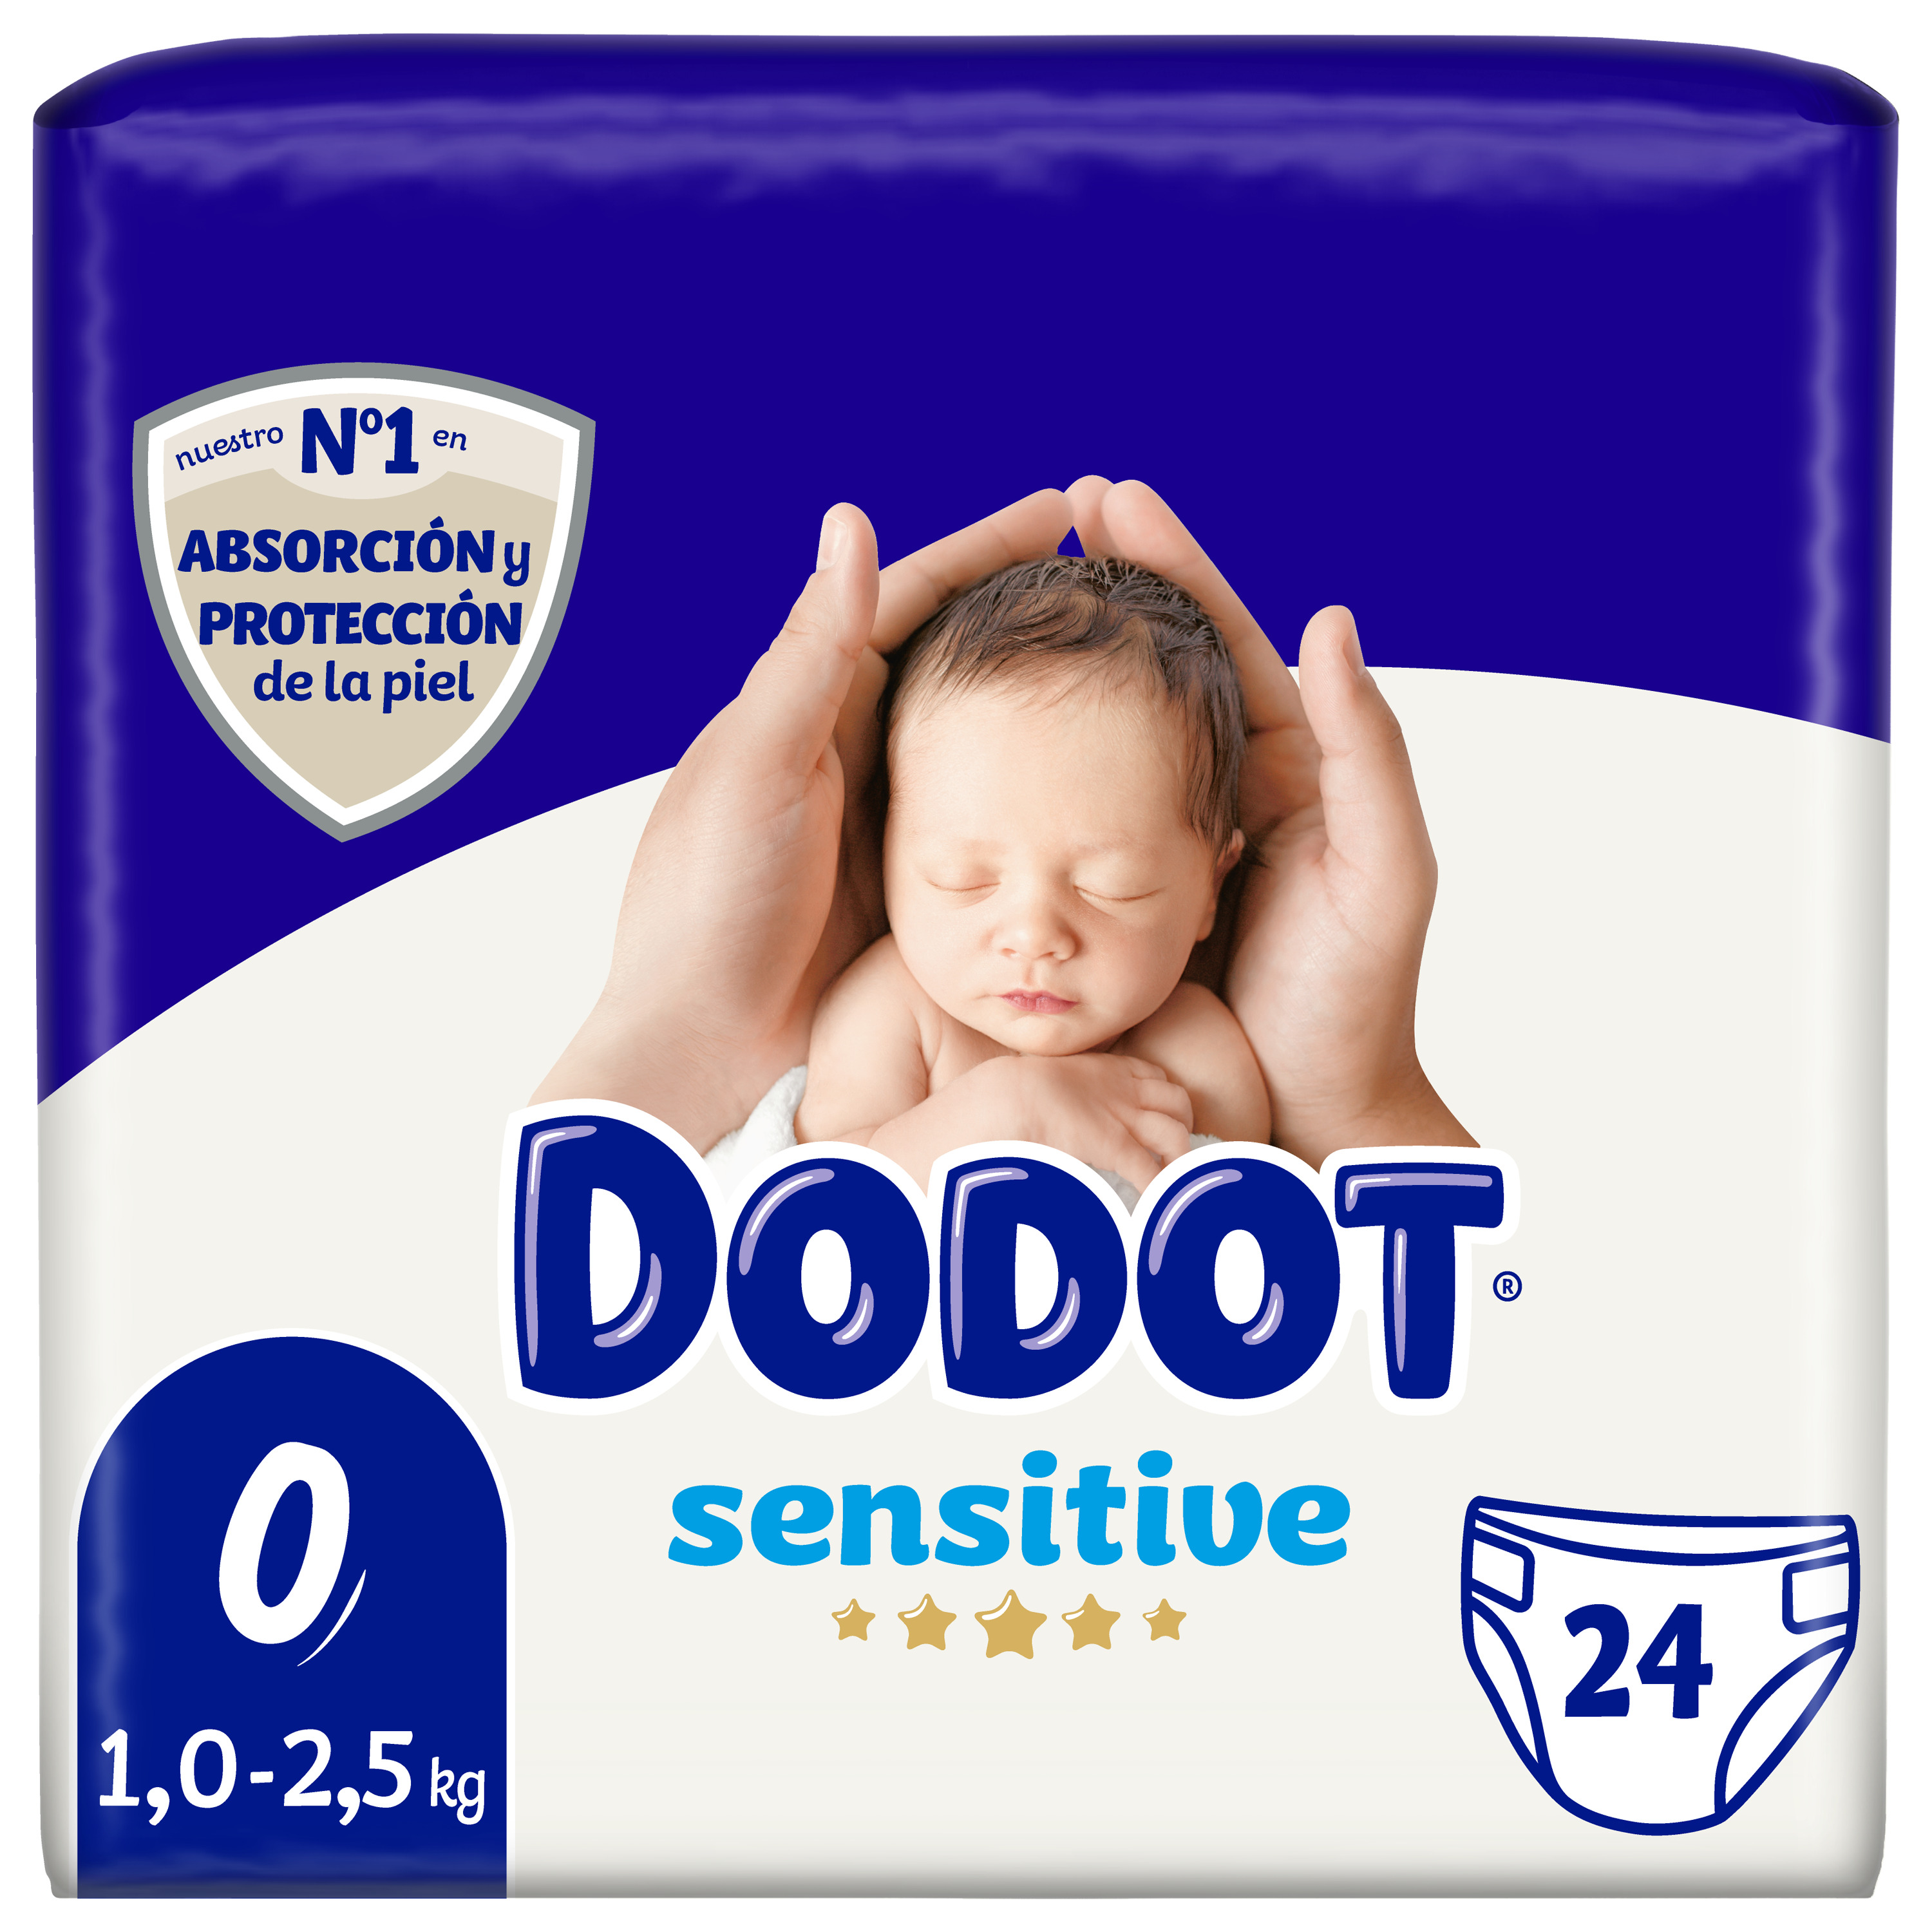 Paquete de pañales Dodot Sensitive talla 0 por sólo 7.53€ ¡¡37% de descuento!!